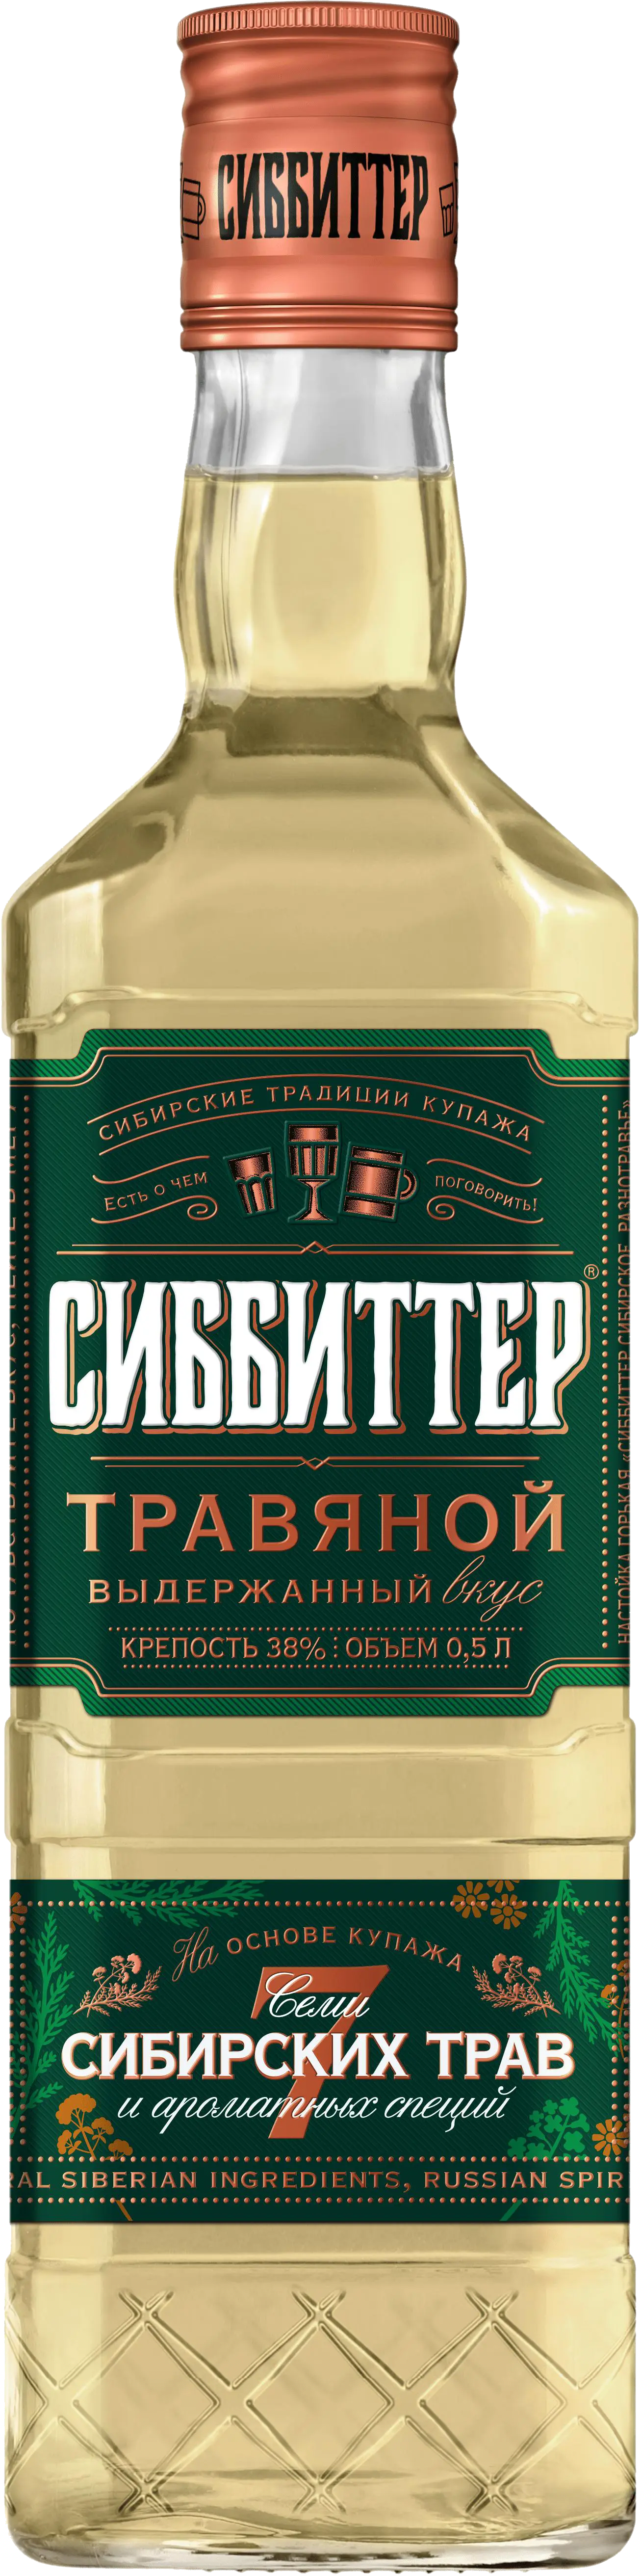 Сиббиттер сибирское разнотравье (Sibbitter siberian herbs)